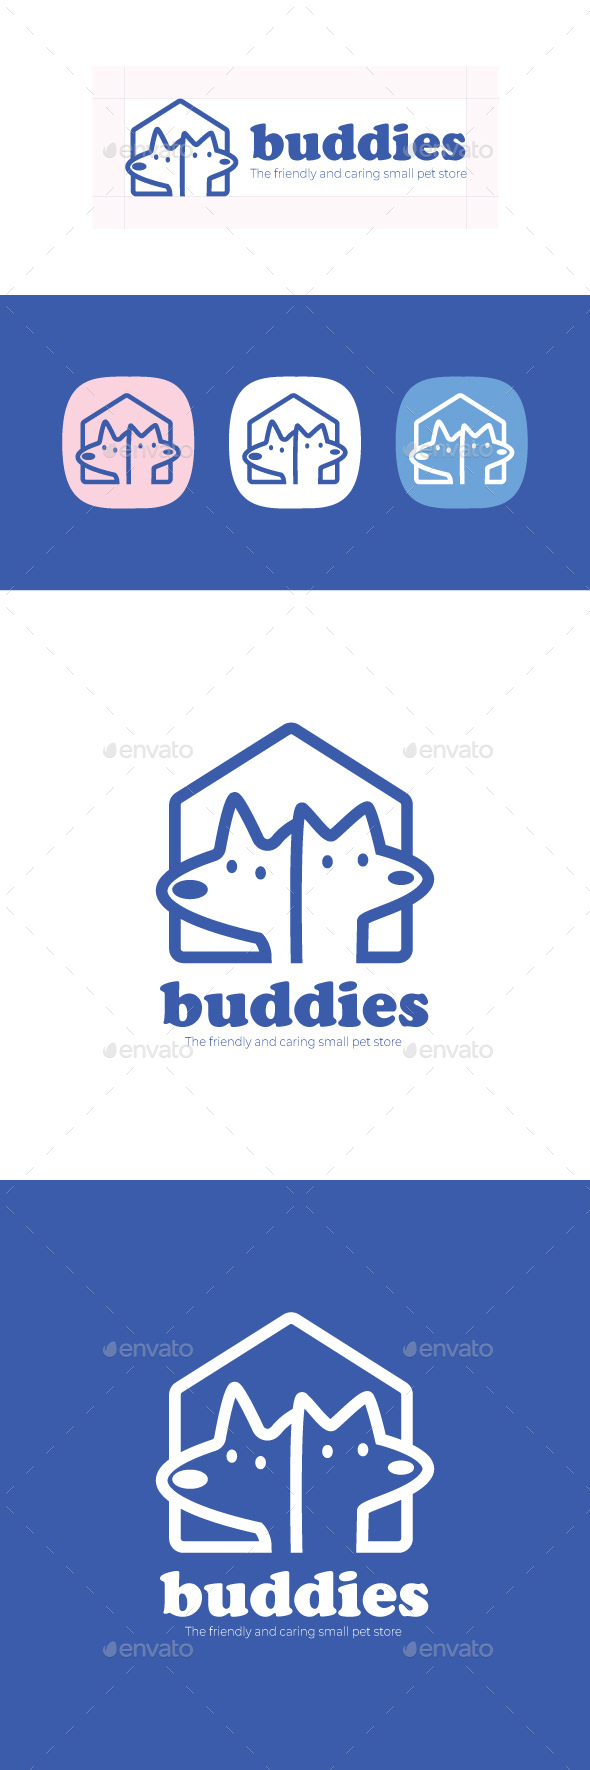 [DOWNLOAD]Buddies Logo